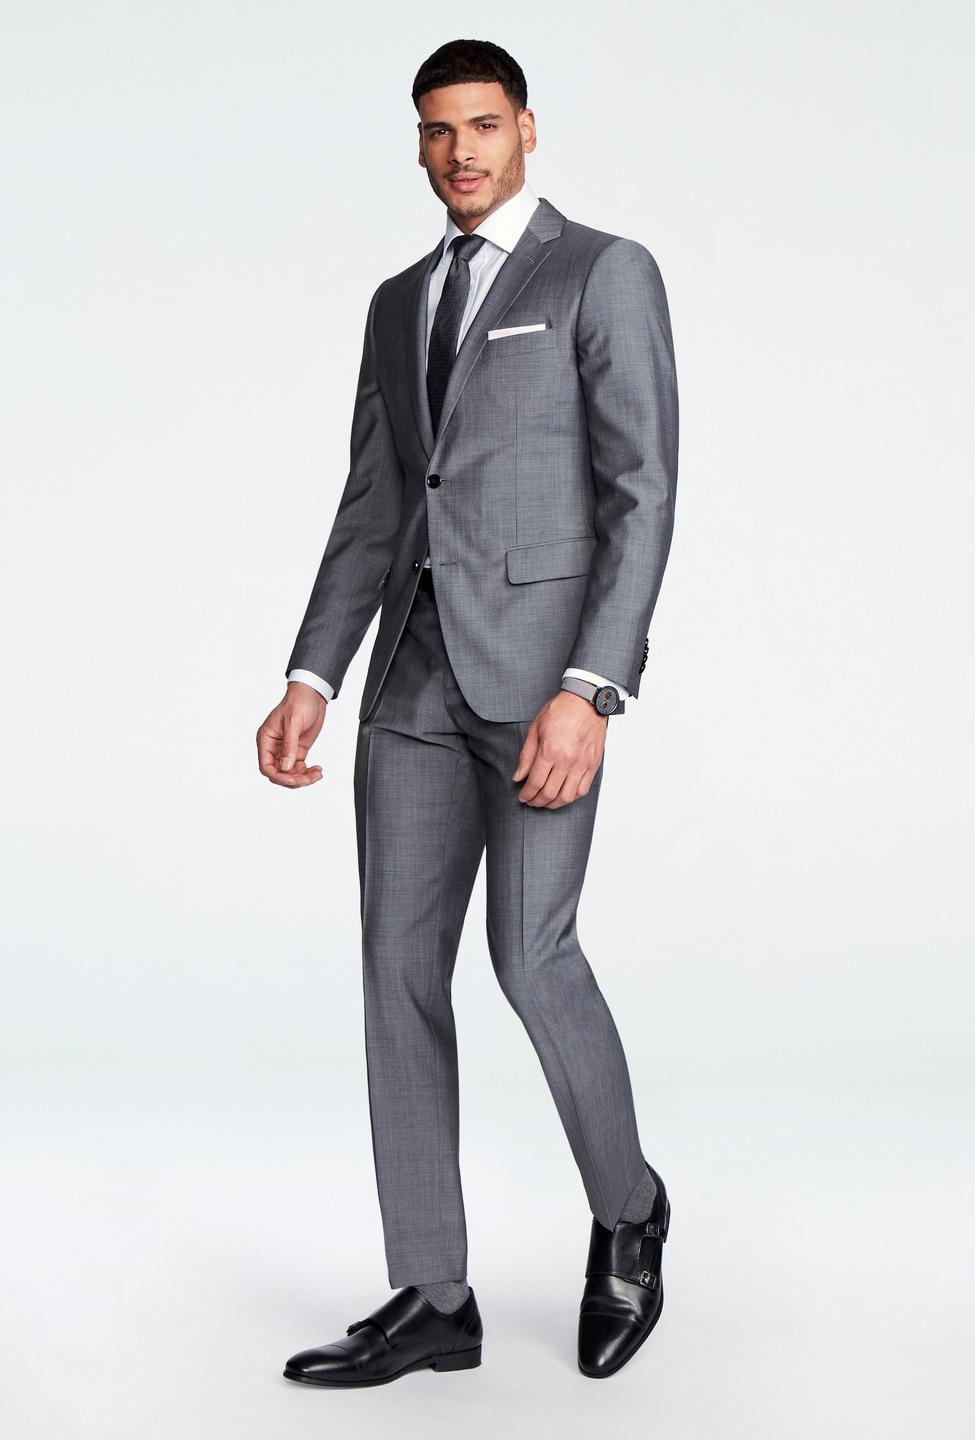 Gray blazer - Hamilton Solid Design from Luxury Indochino Collection